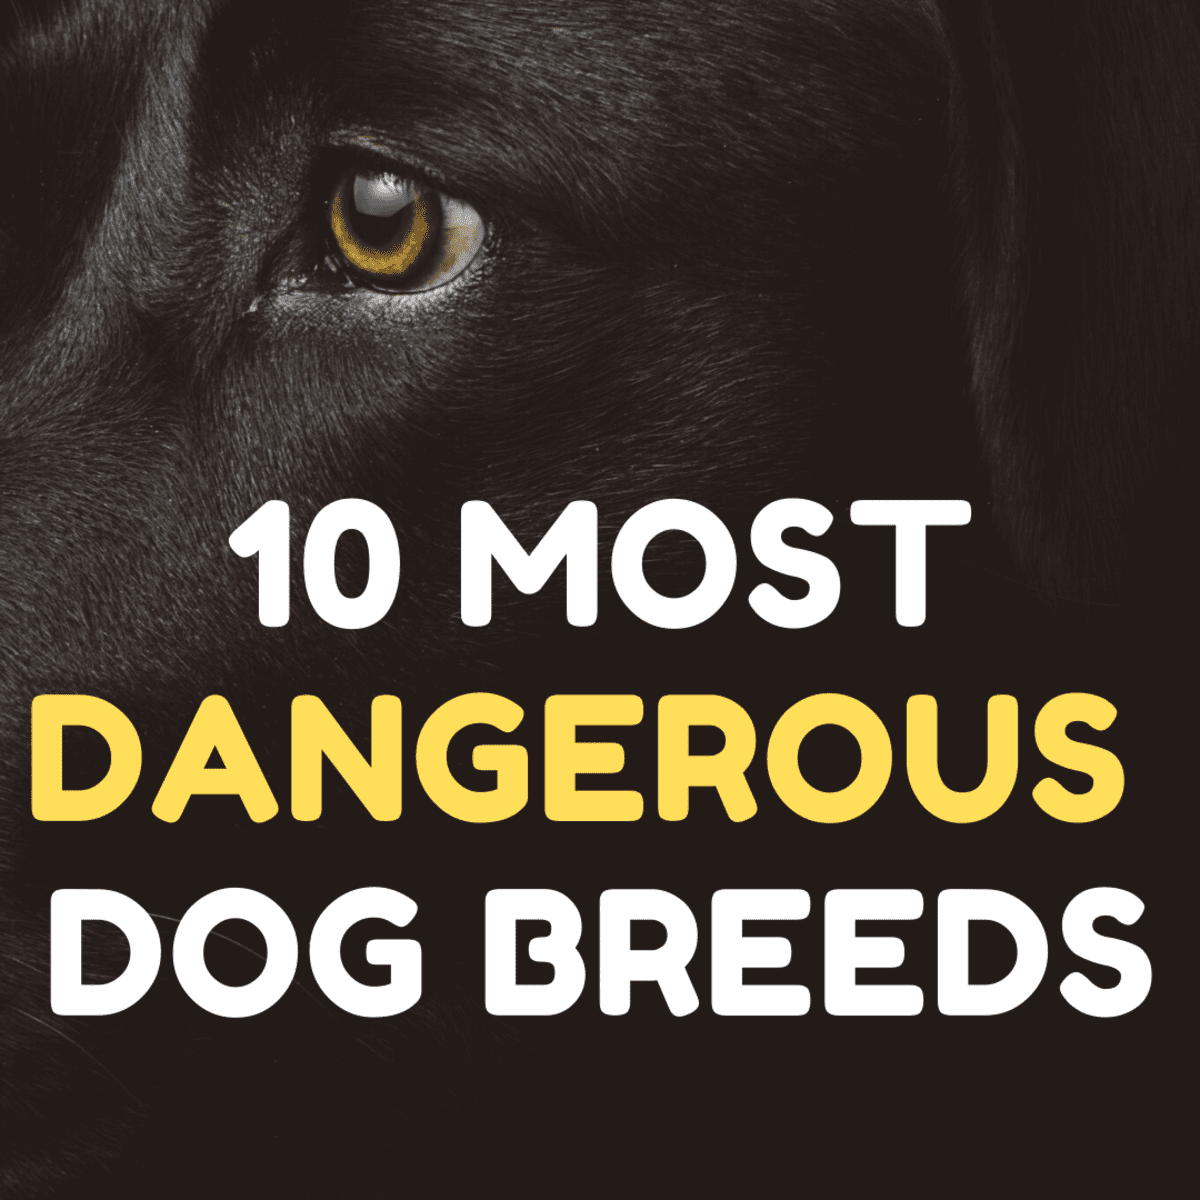 Most Dangerous Dog Breeds: Dog Bite and Attack Statistics - PetHelpful